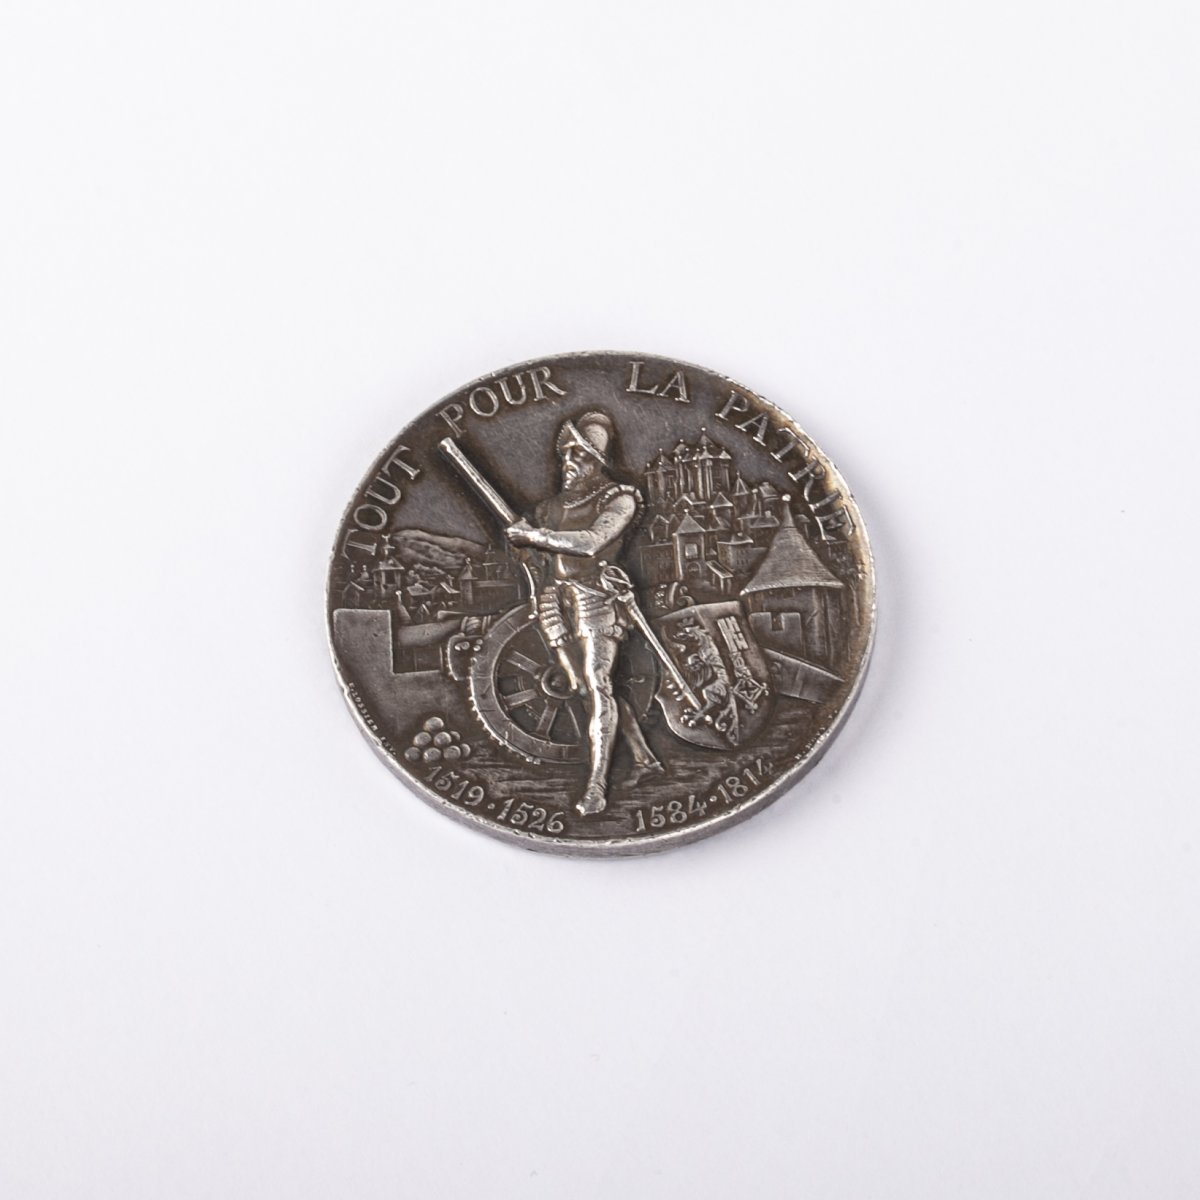 Geneva Silver Shooting Thaler Medal "Tout Pour La Patrie" 1887